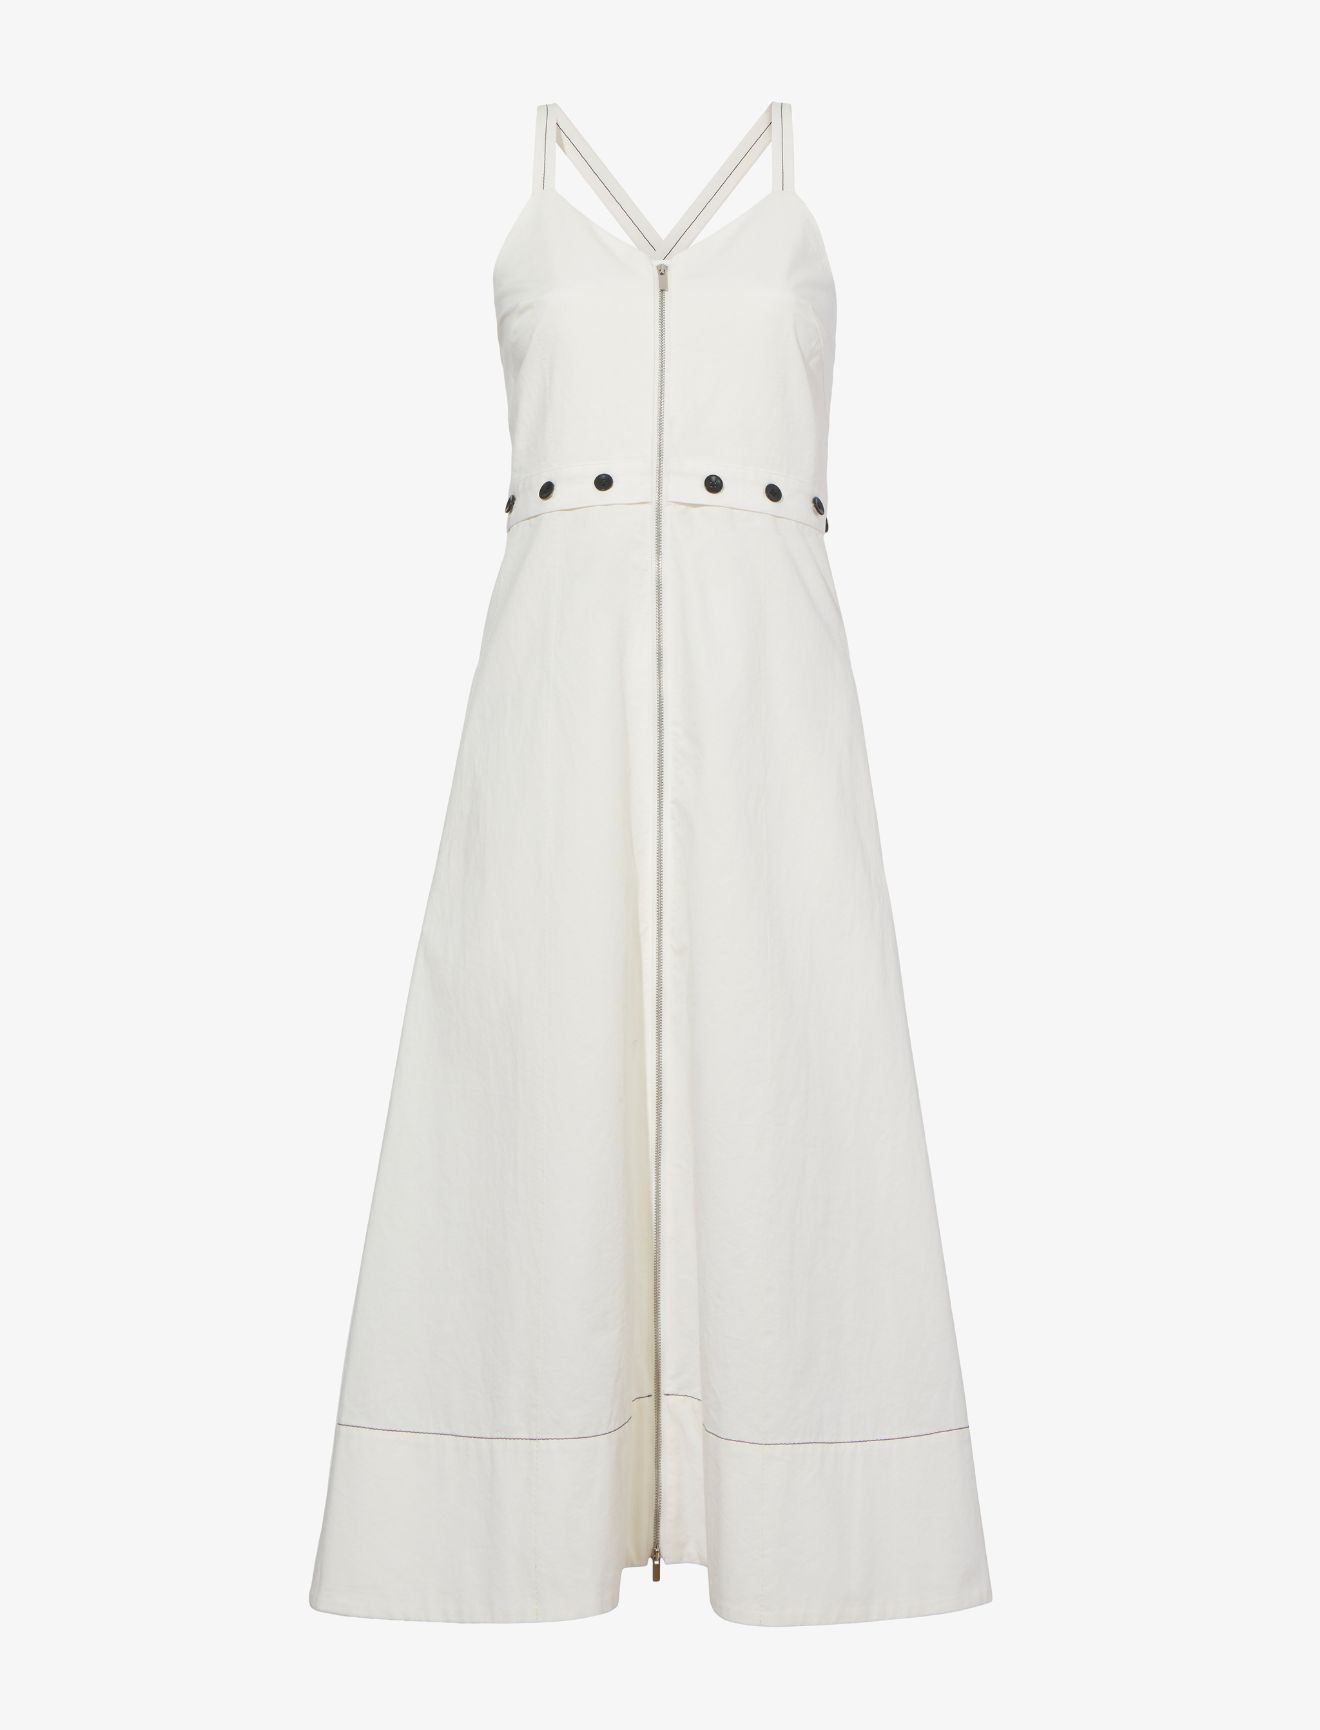 Cotton Linen Sleeveless Dress in off white | Proenza Schouler